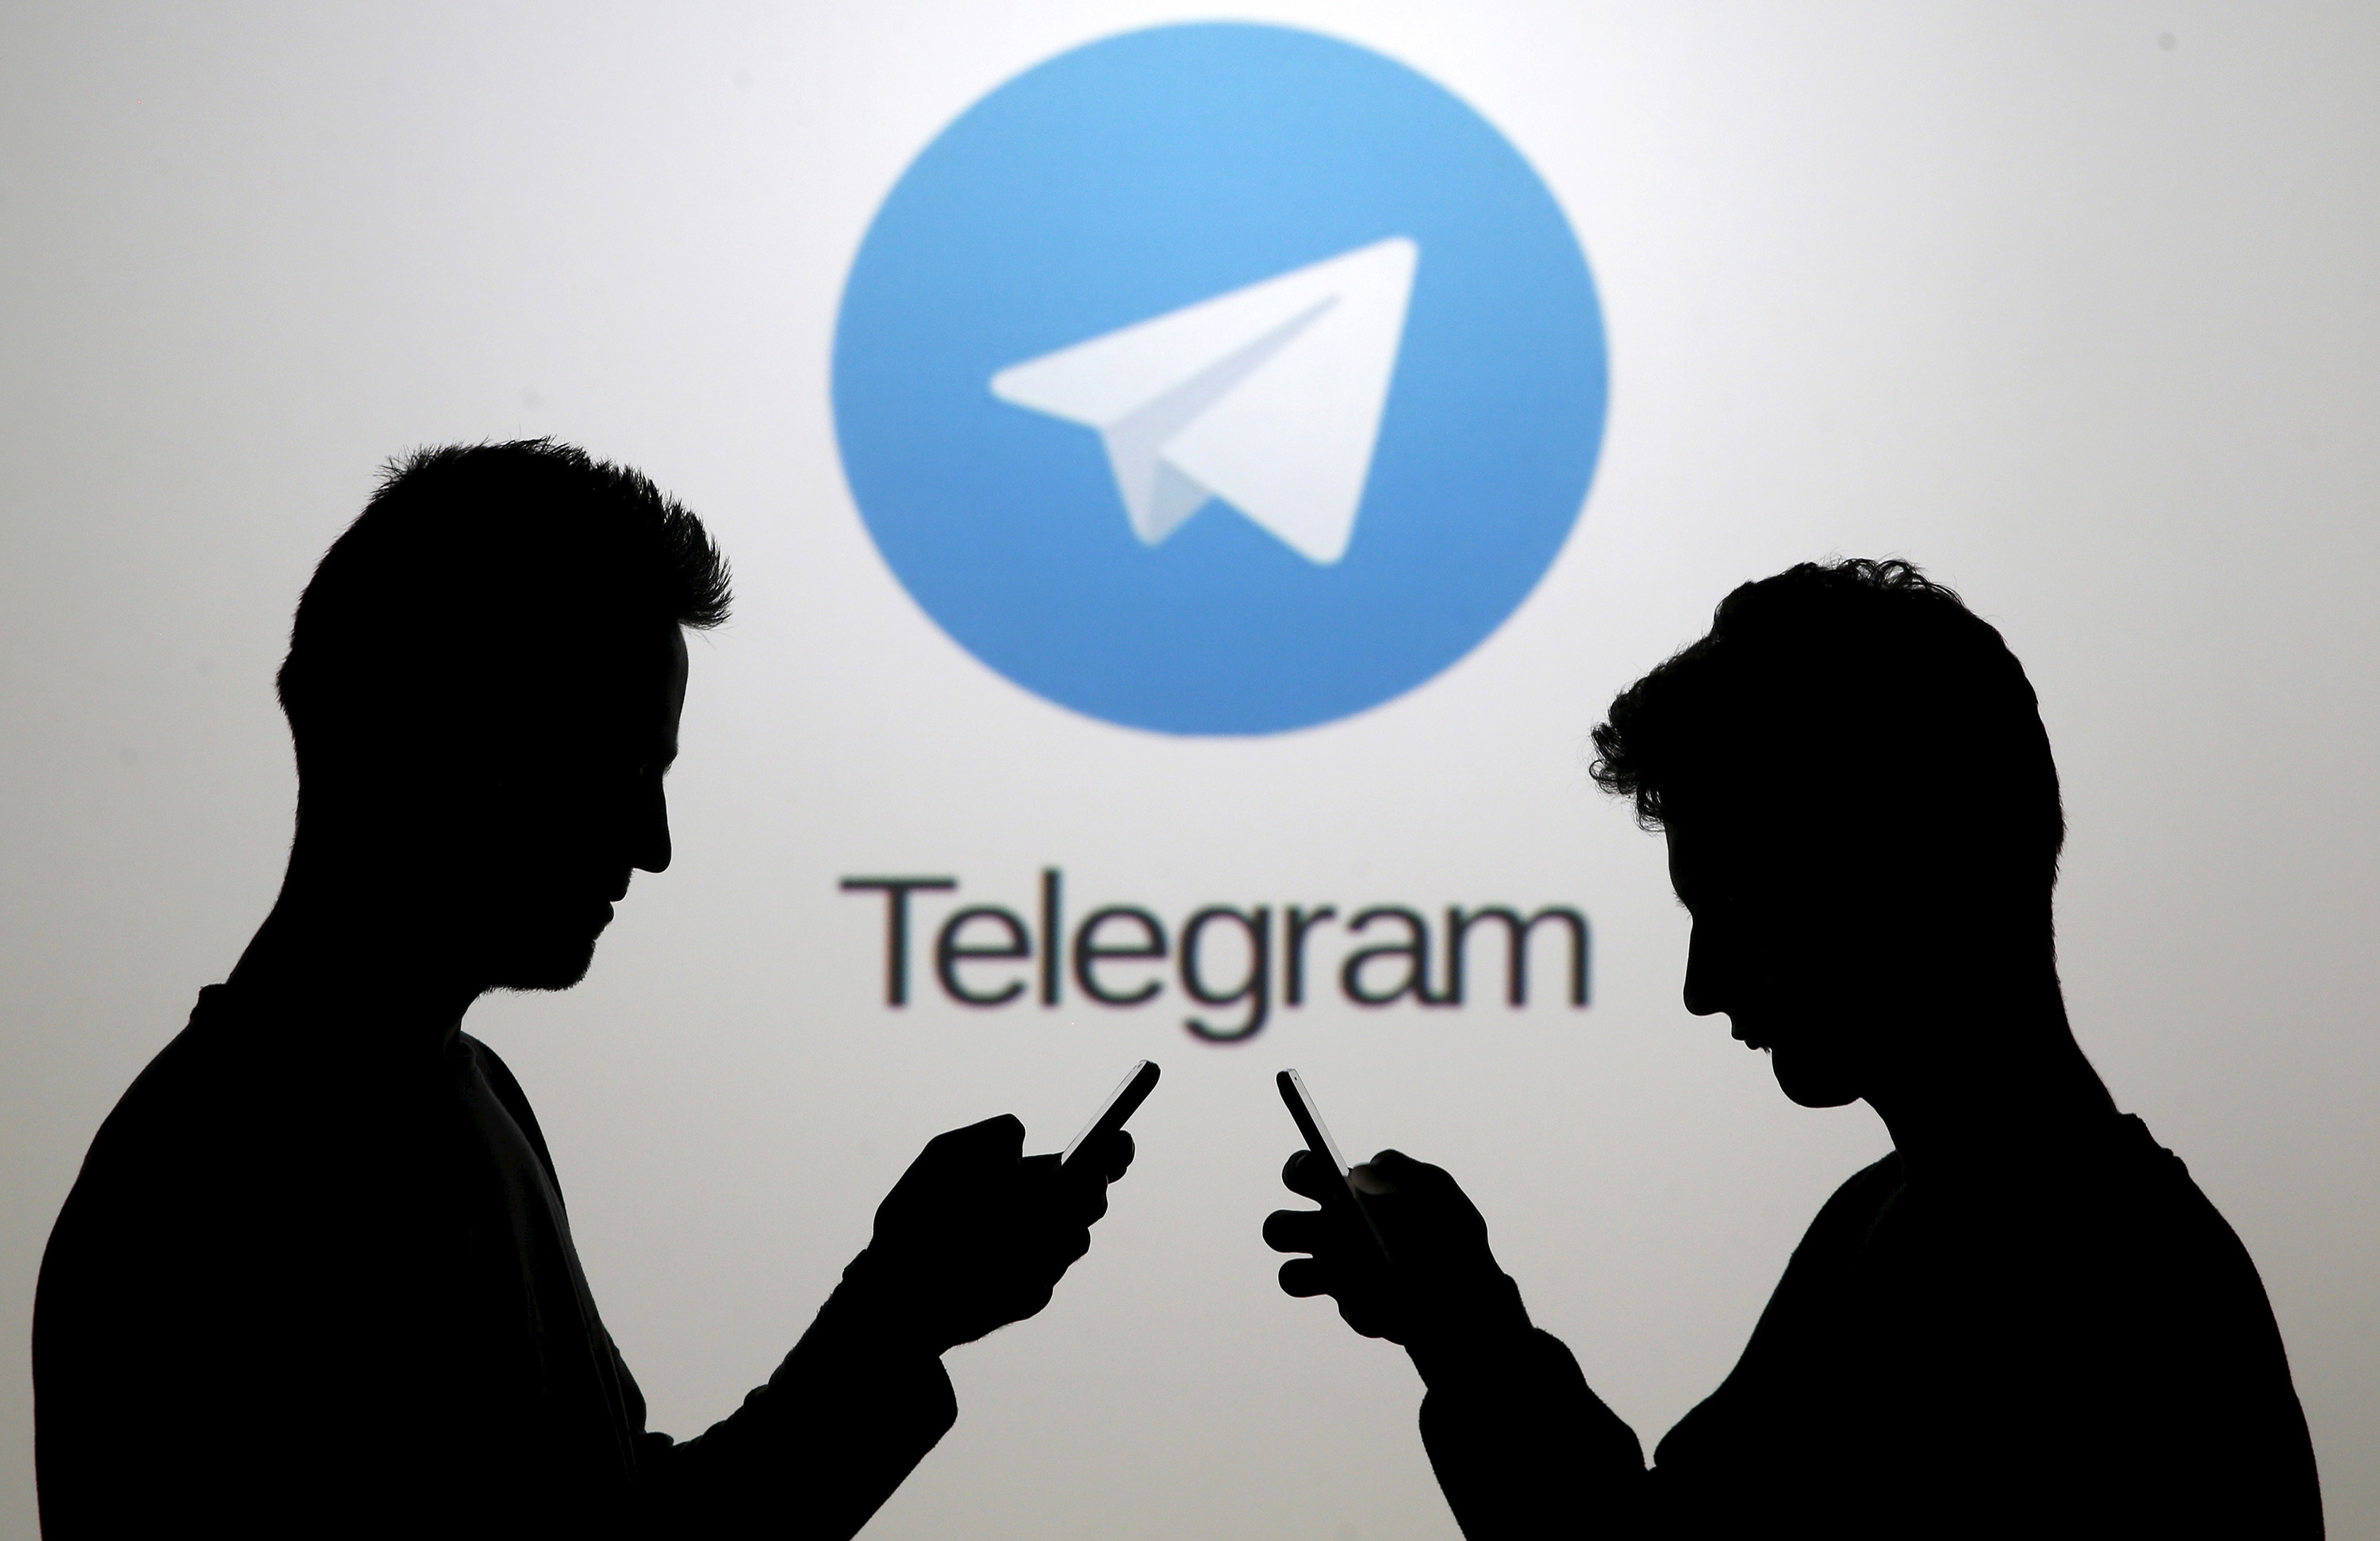 آموزش مخفی کردن نام اکانت در تلگرام Hidden Name in Telegram